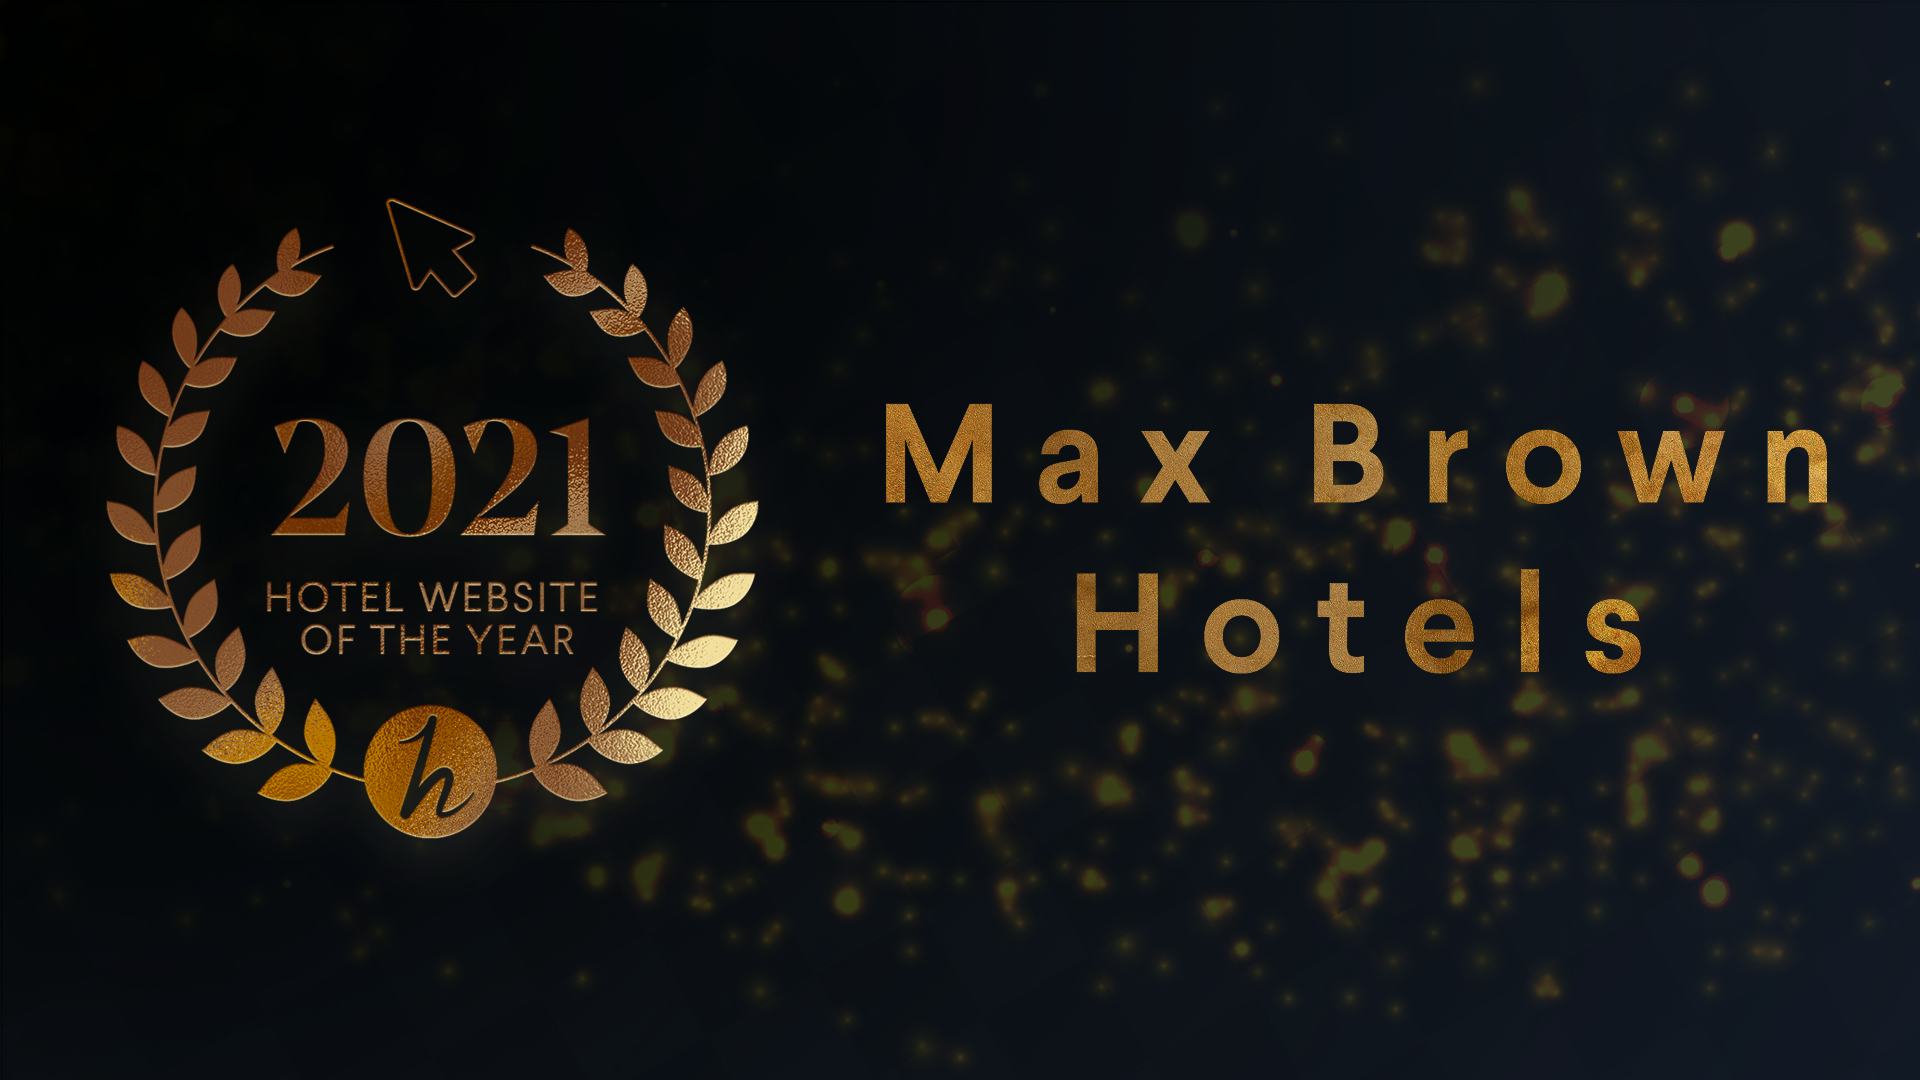 Max Brown Hotels wint verkiezing Hotel Website of the Year 2021